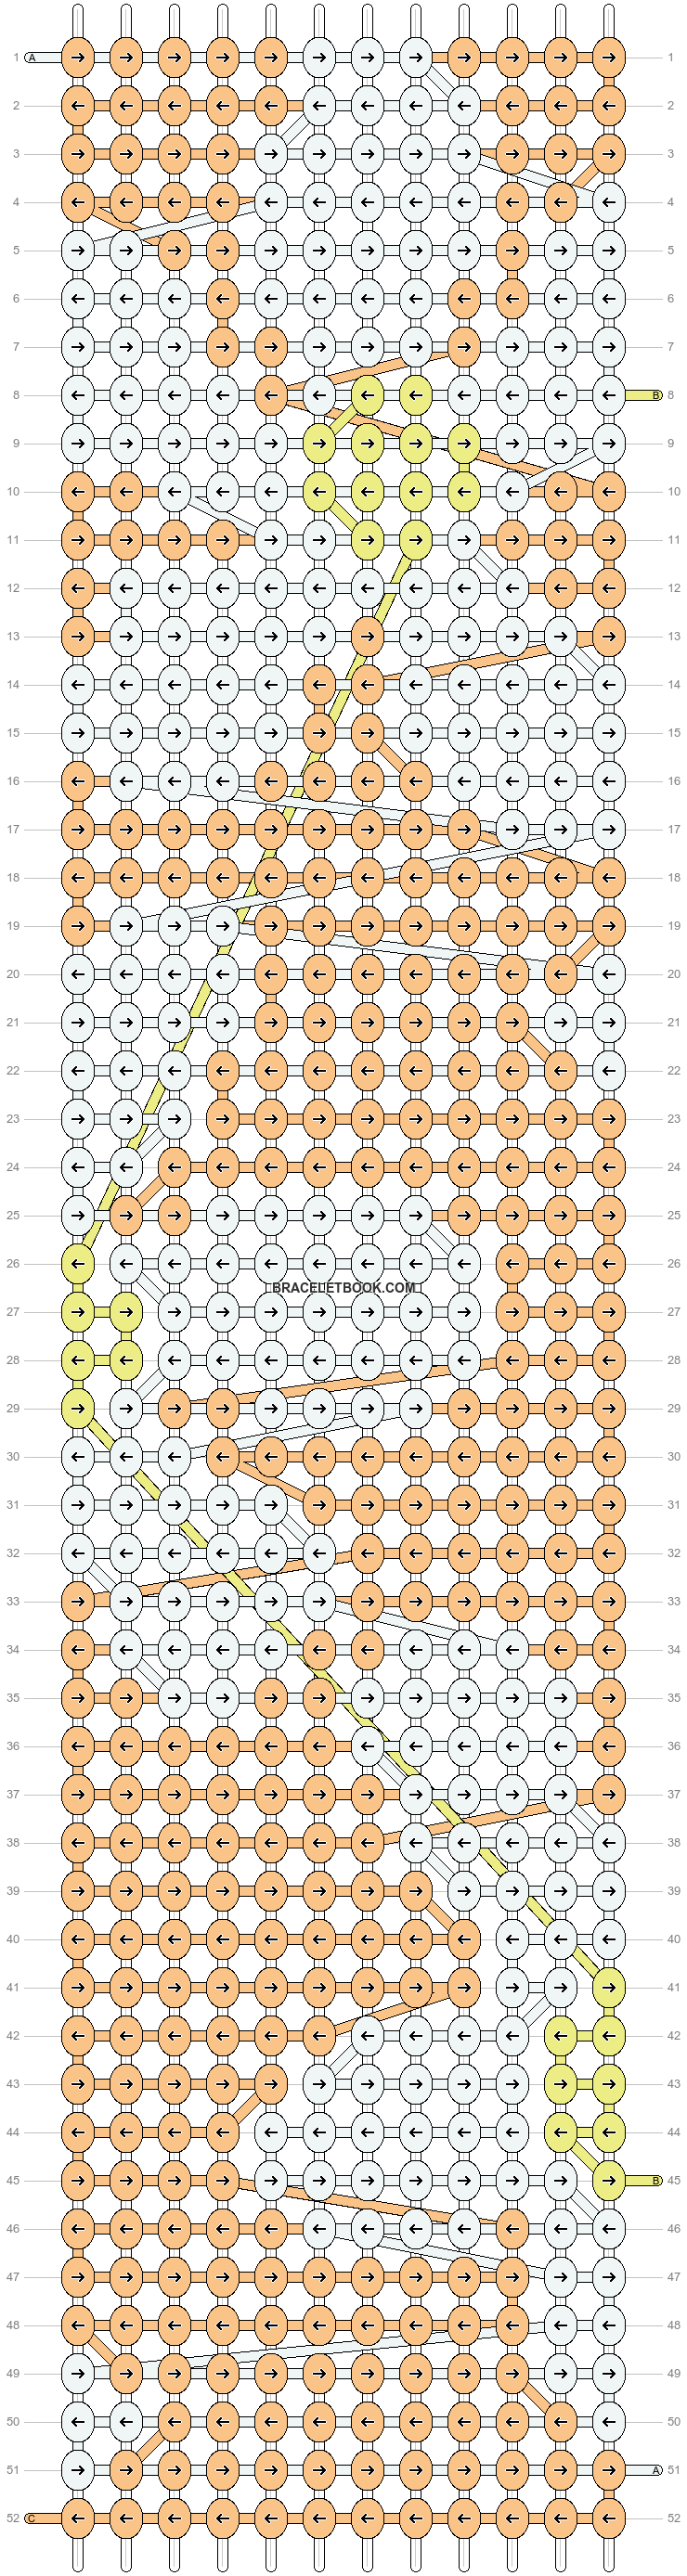 Alpha pattern #23857 variation #44745 pattern